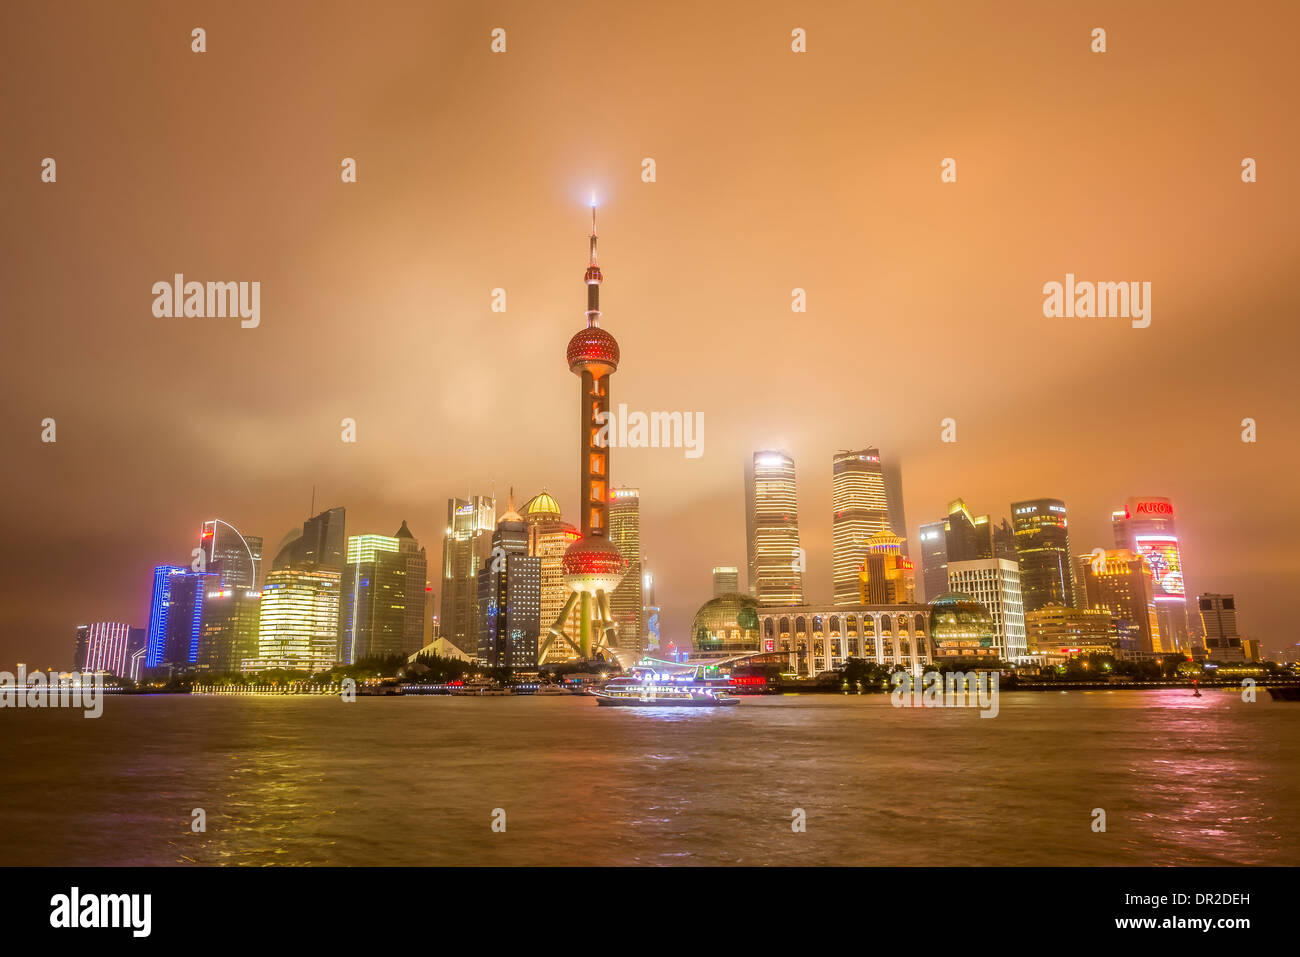 Nachtansicht der Shanghai Pudong New Area, Shanghai, China Stockfoto